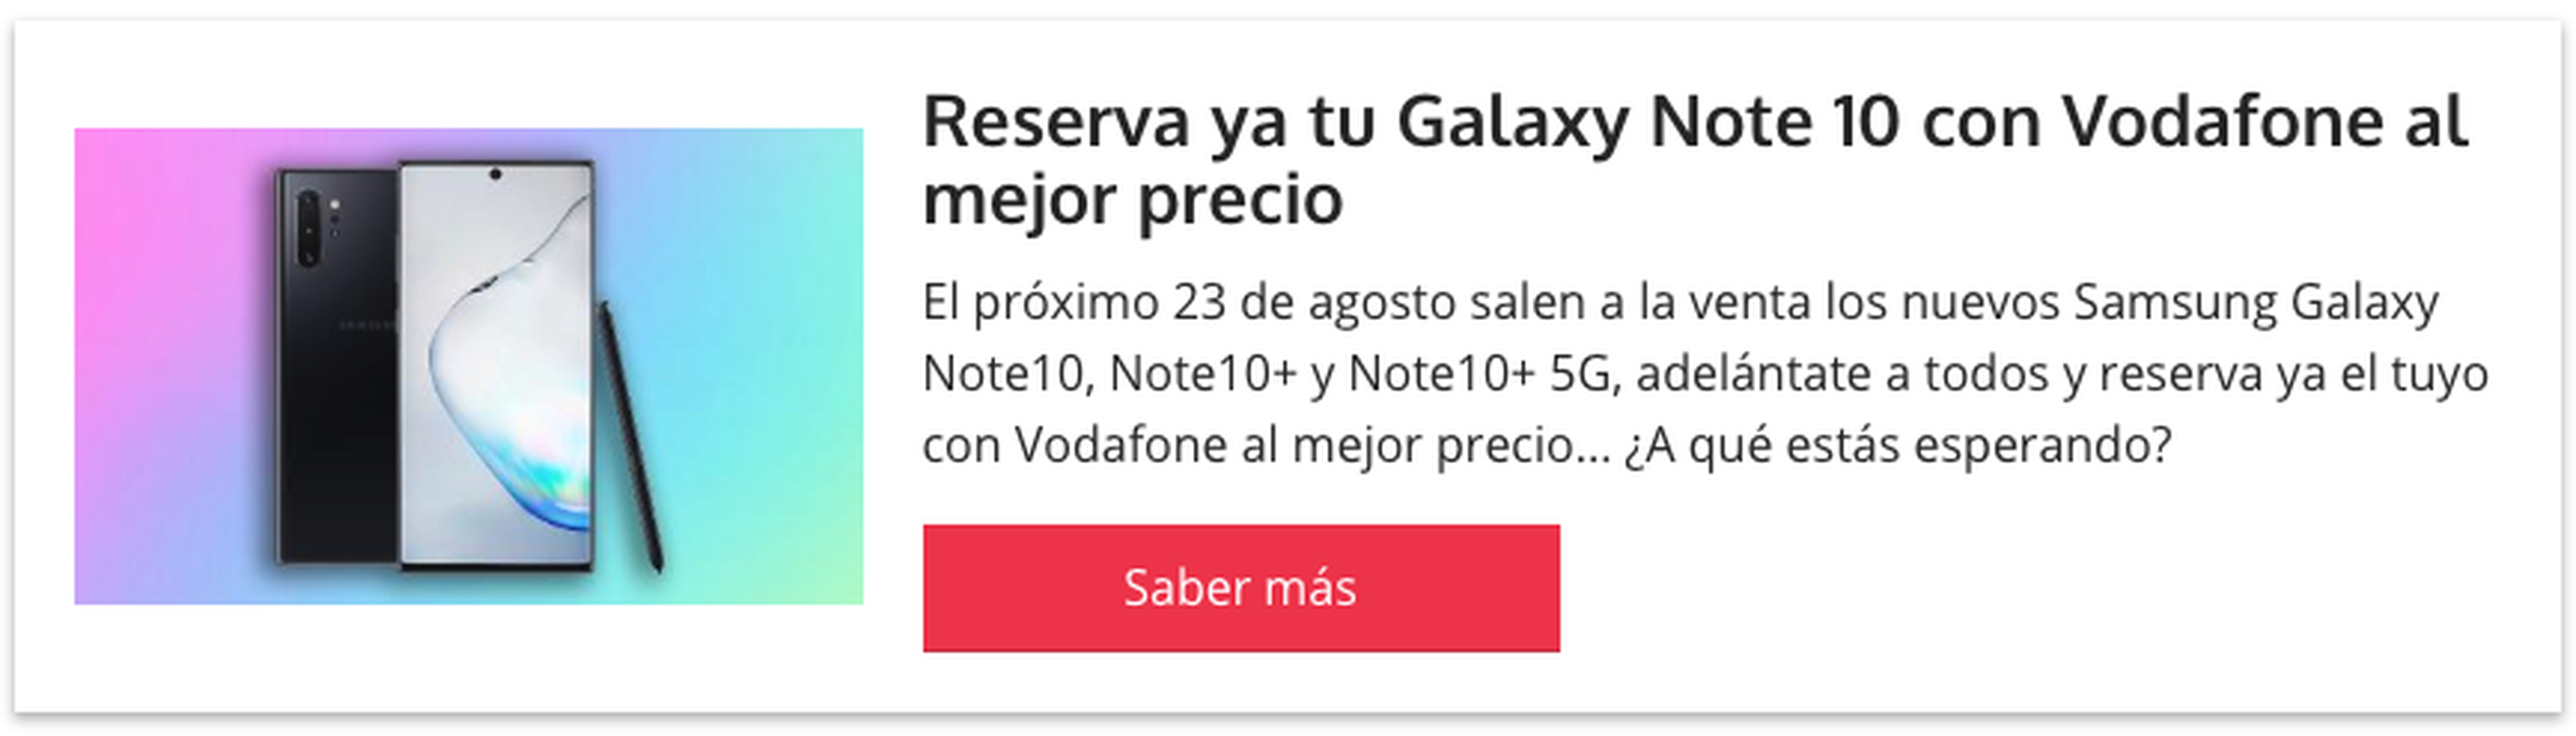 Samsung Galaxy Note 10 reserva